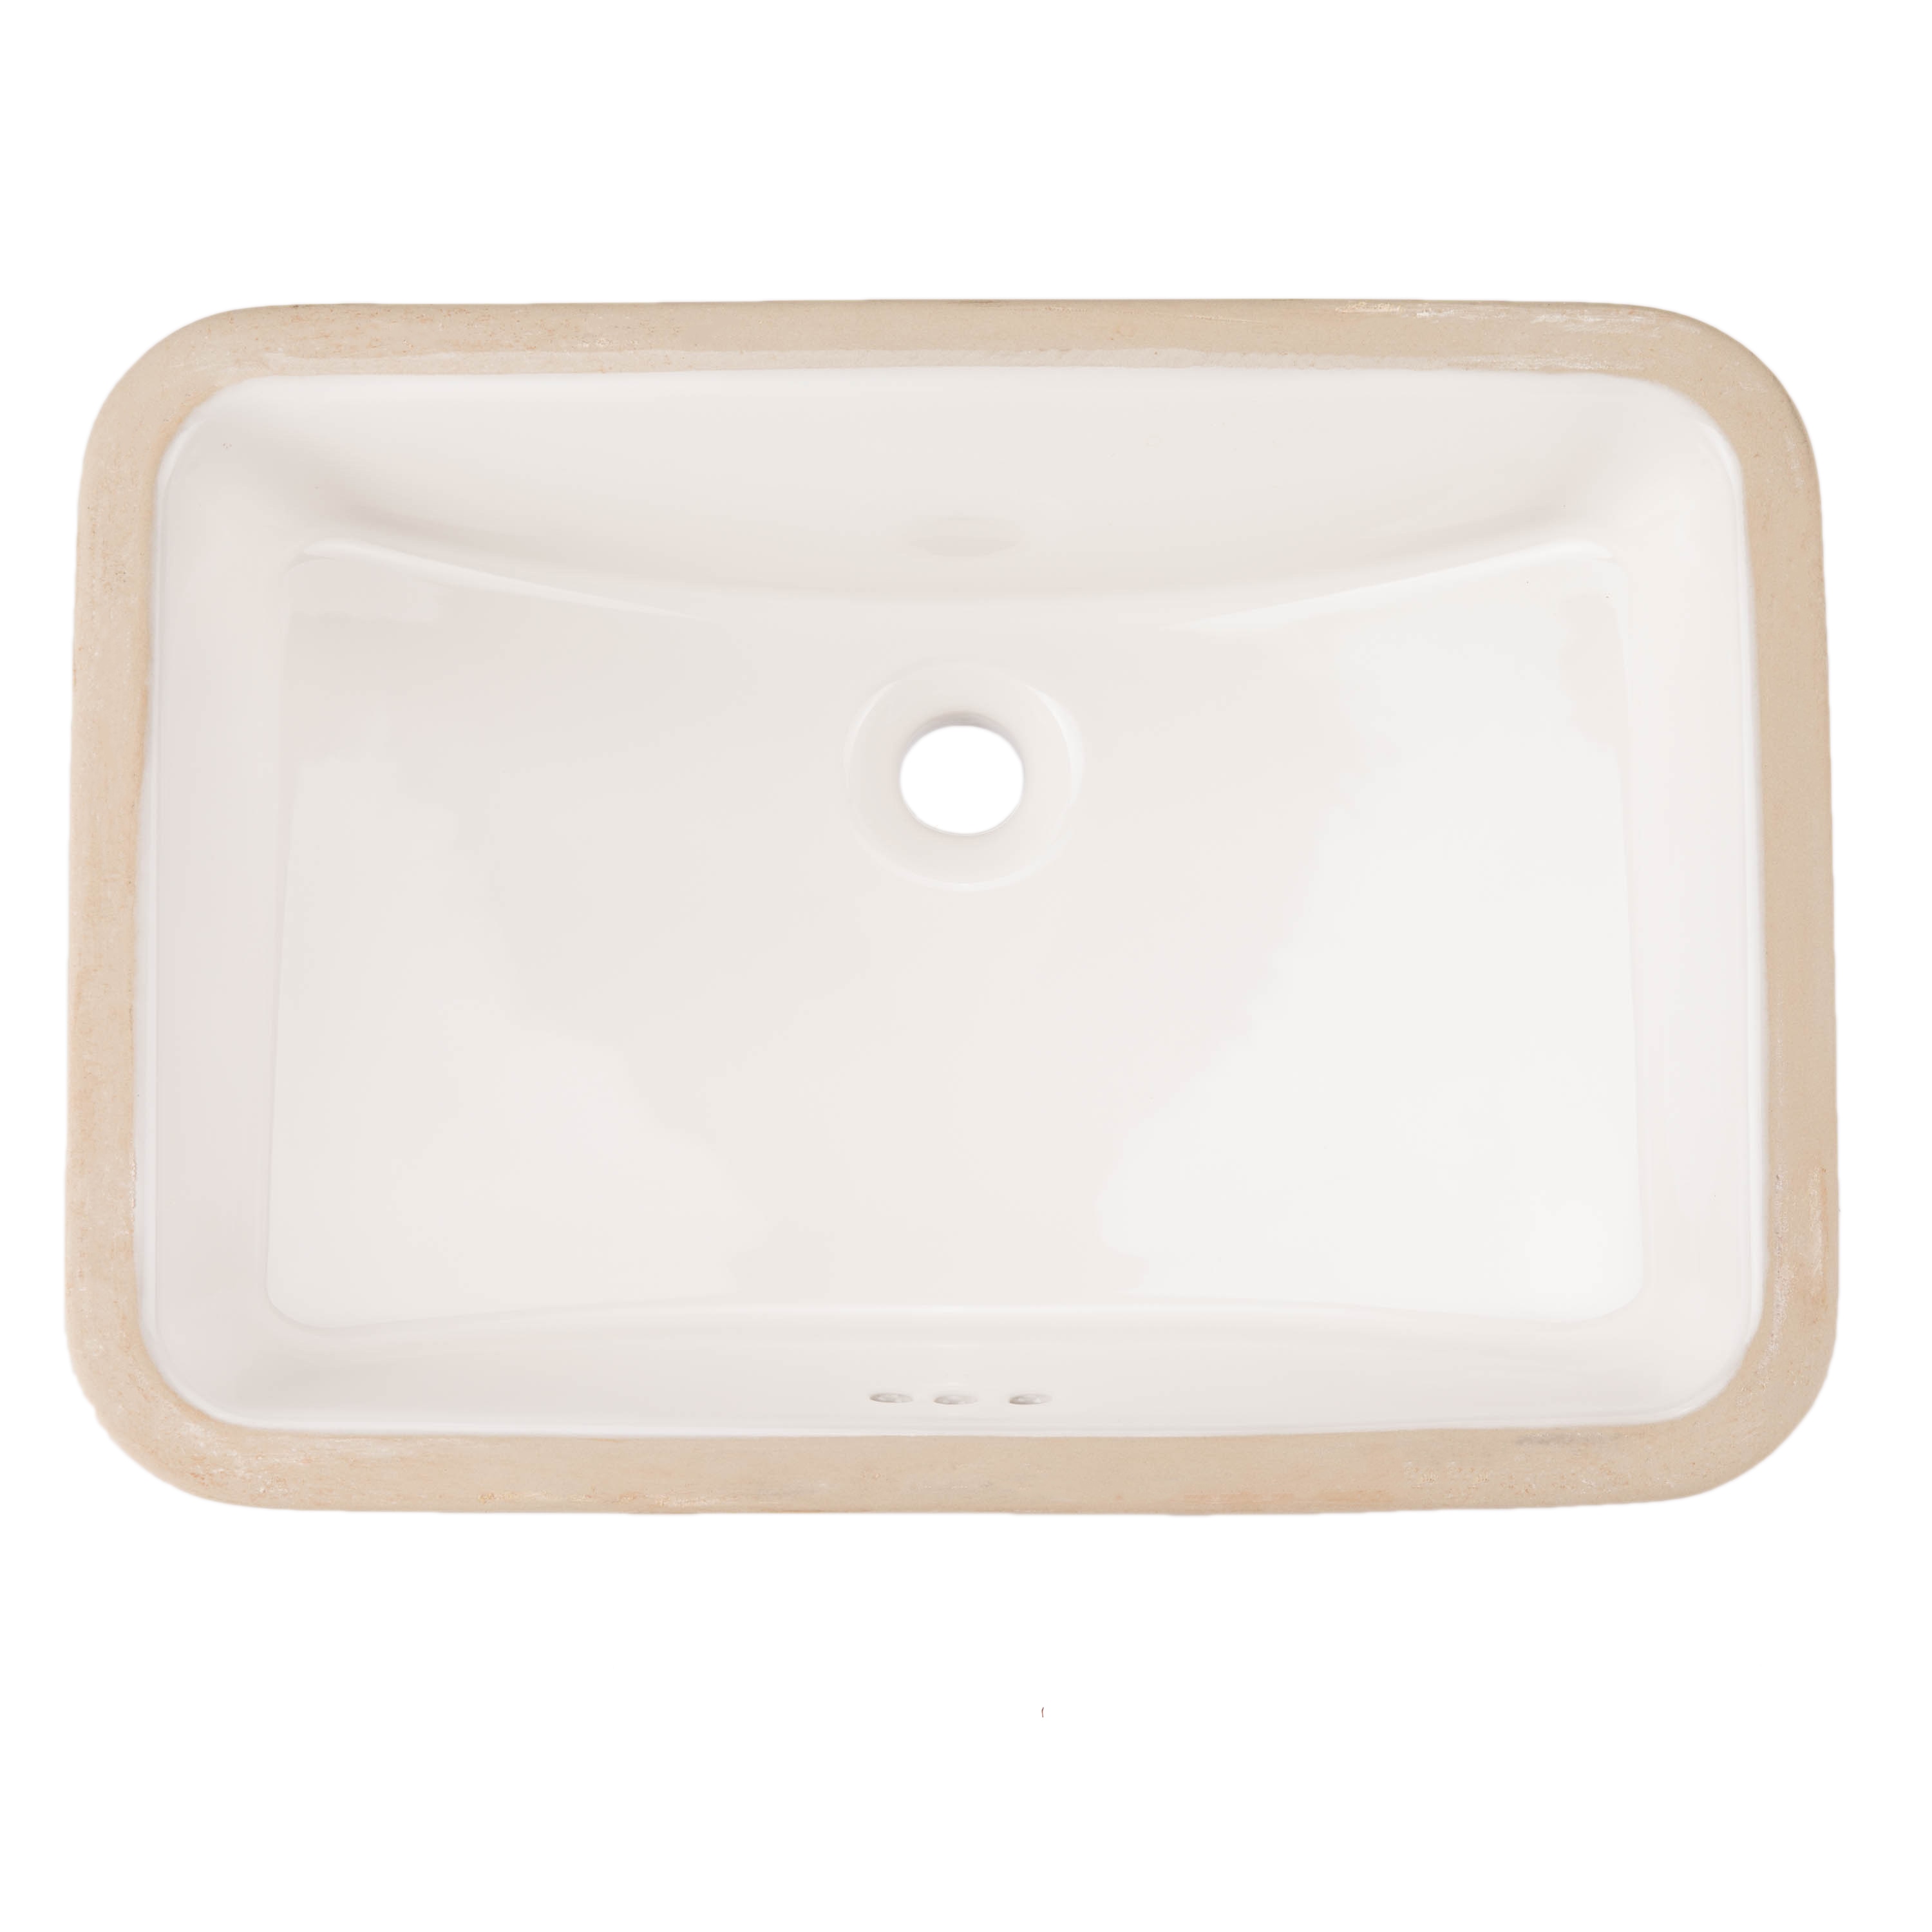 Aquatica Metamorfosi-SD-Wht Metamorfosi Sink Drain W. White Ceramic Cover